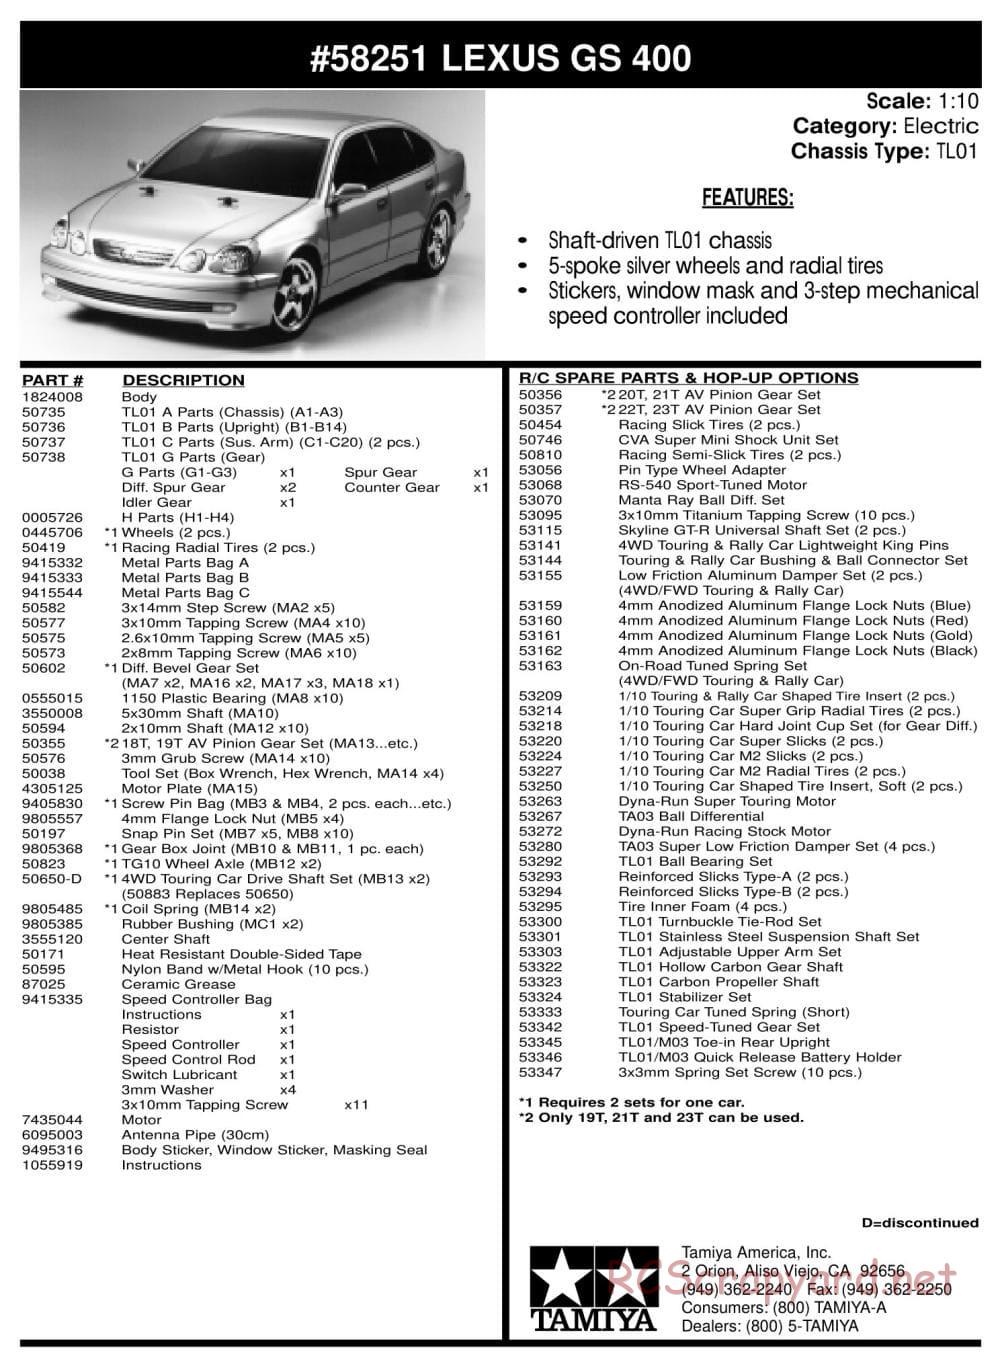 Tamiya - Lexus GS 400 - TL-01 Chassis - Parts List